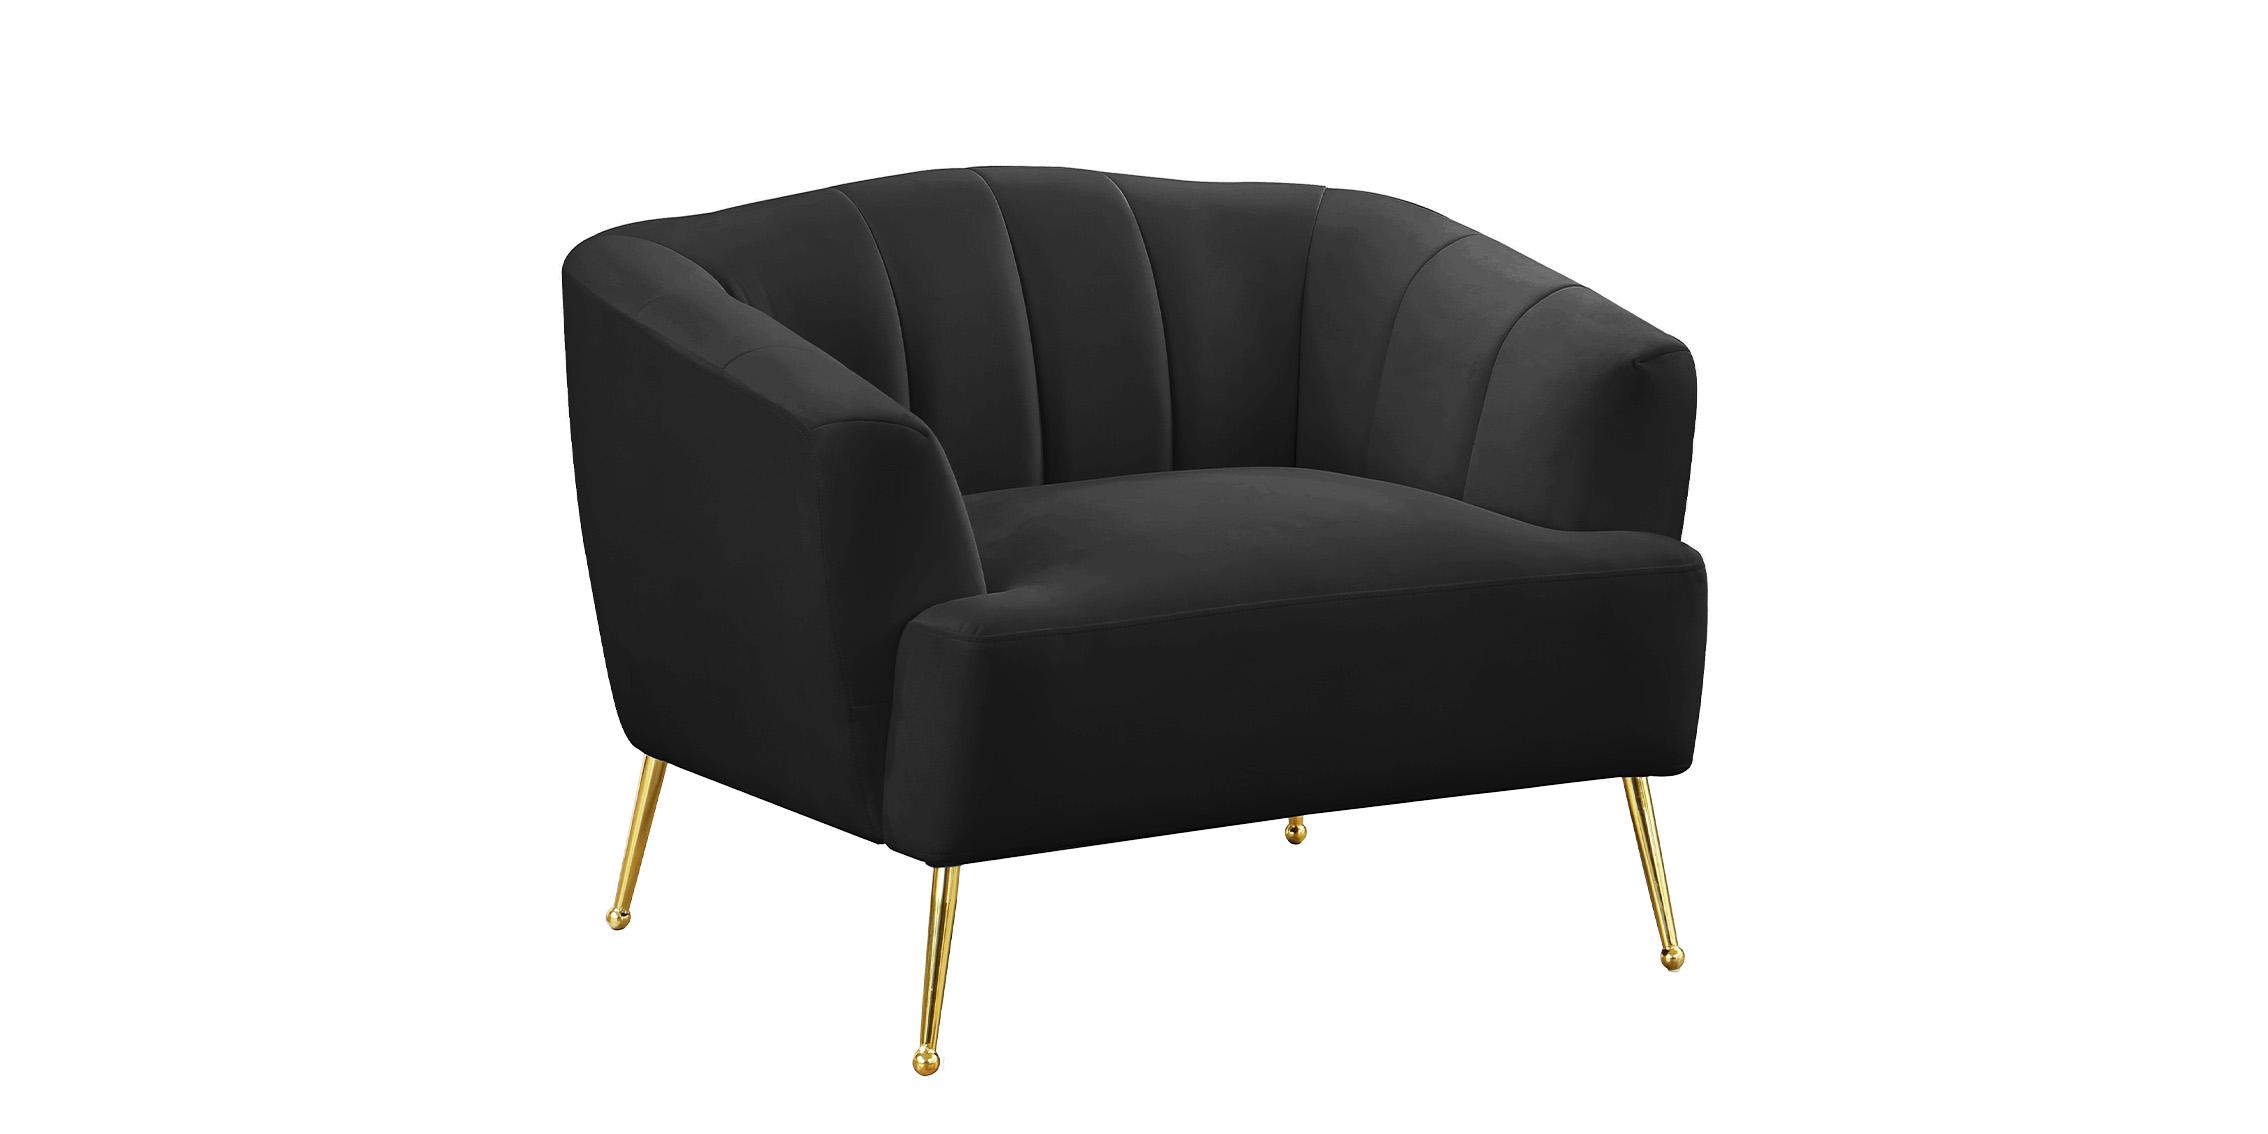 Contemporary, Modern Arm Chair TORI 657Black-C 657Black-C in Black Velvet